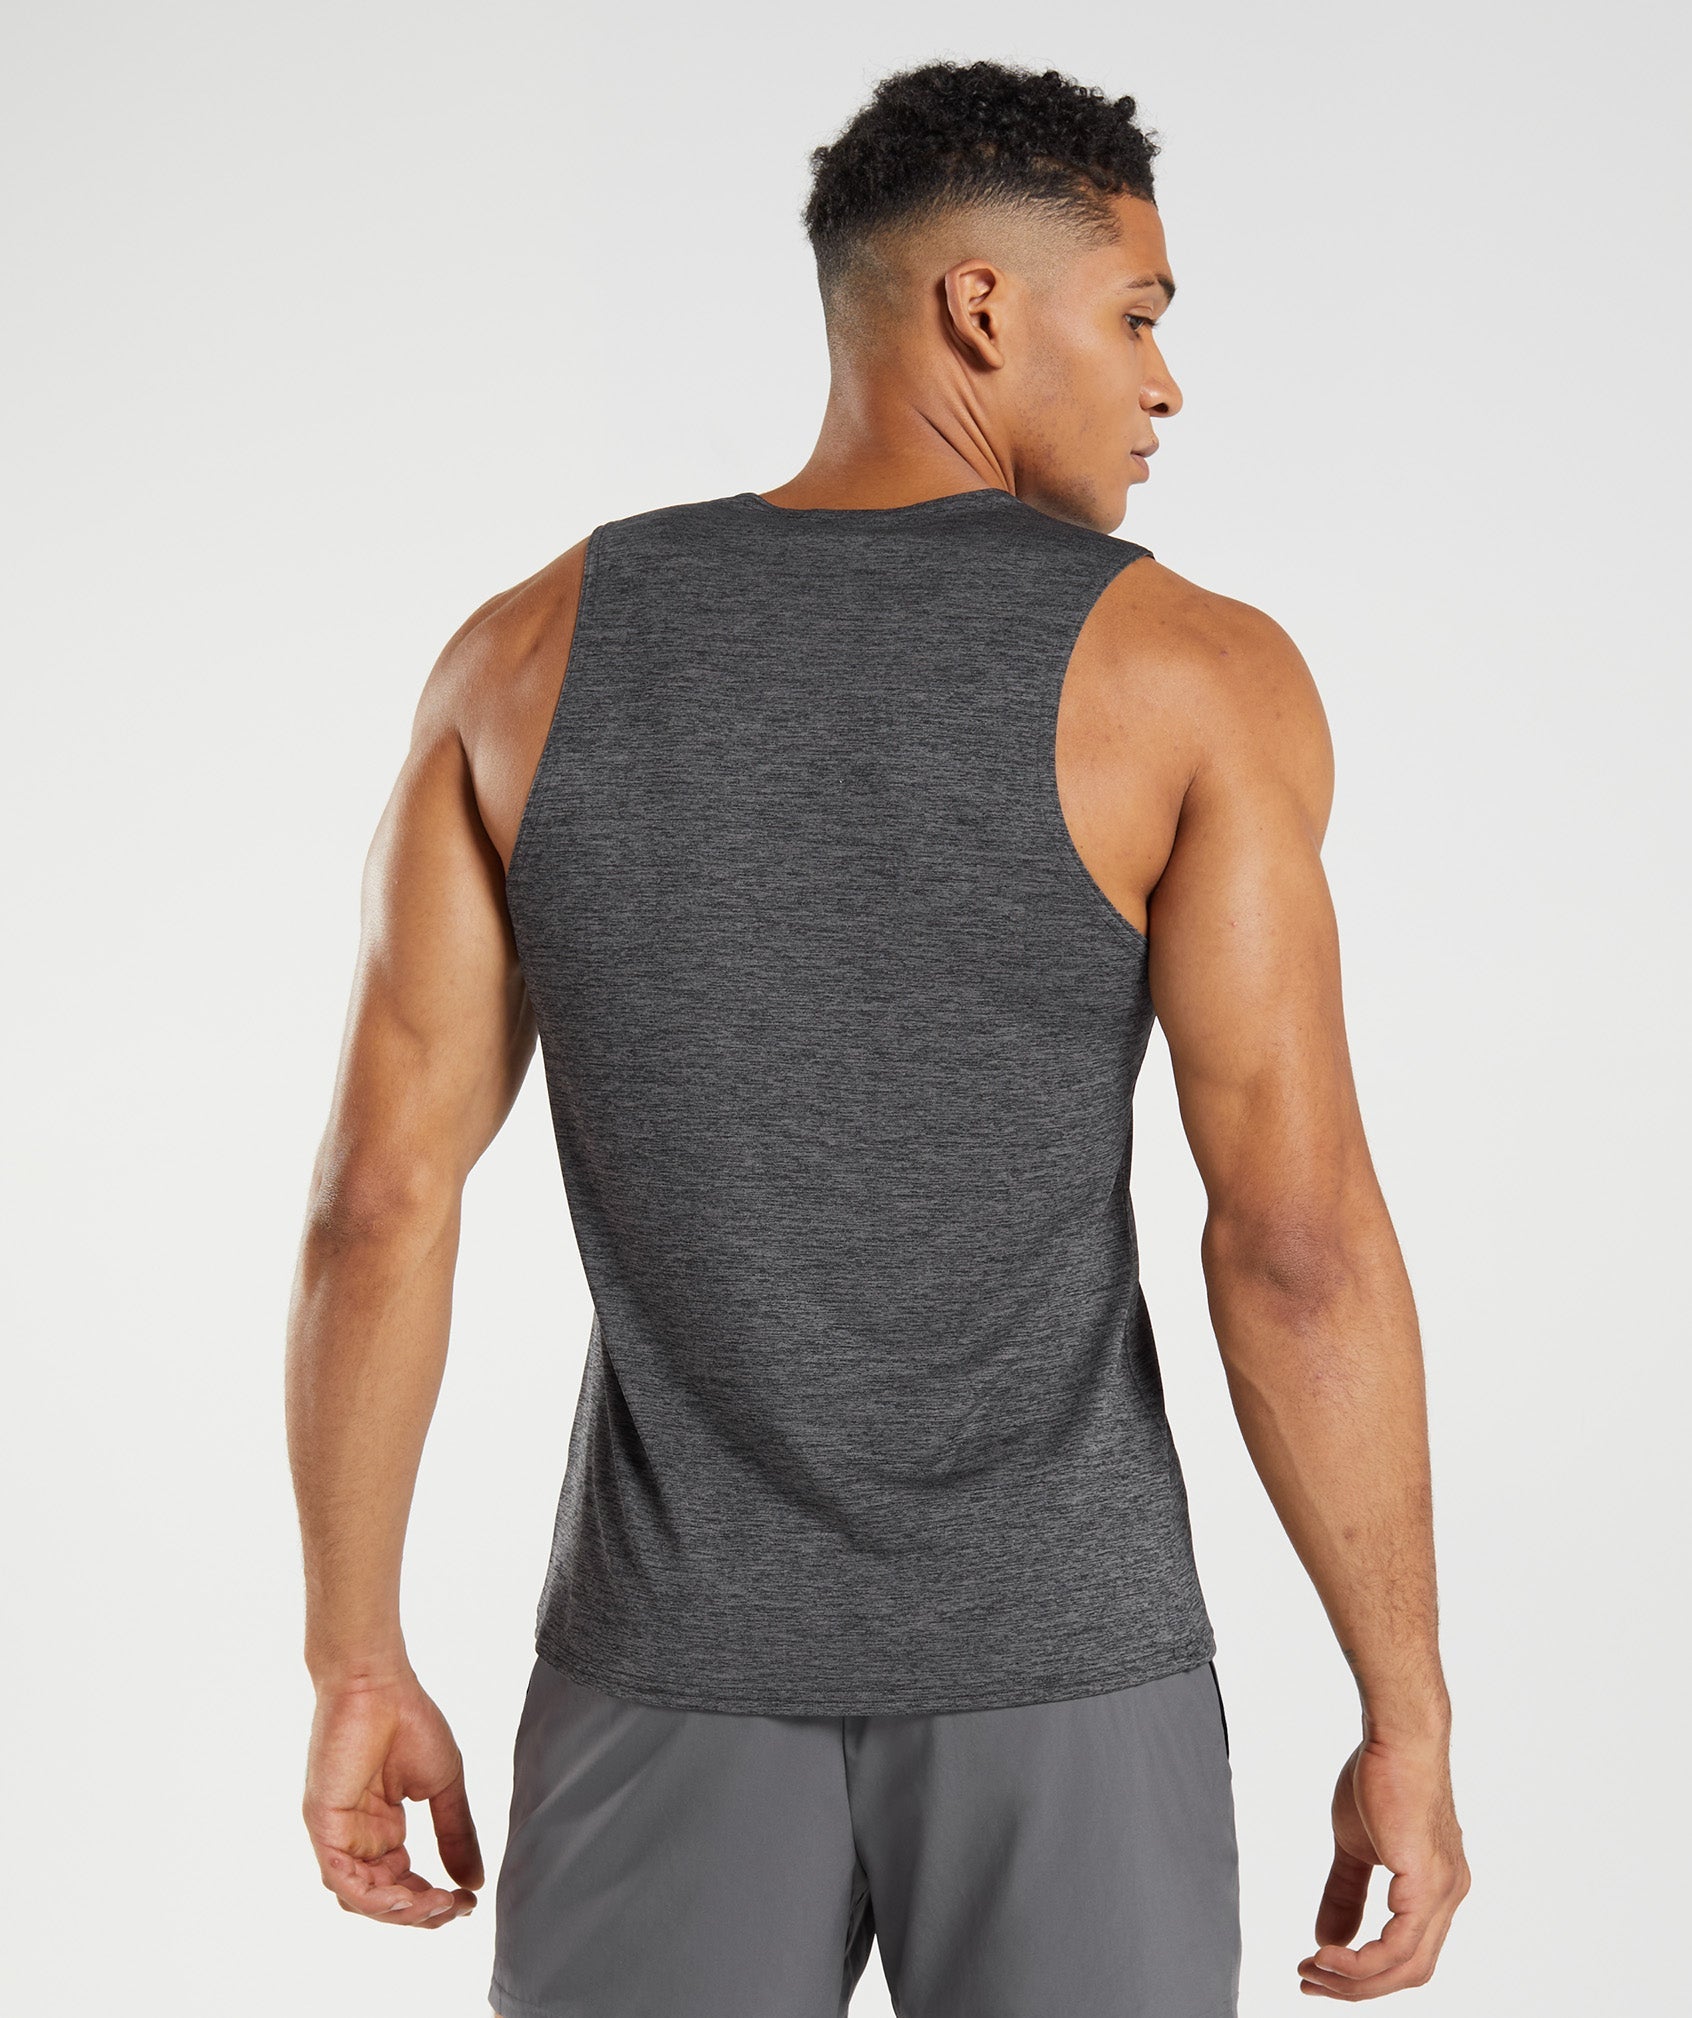 Fitness! New brand 2014 cotton Gymshark tank tops men Muscle world